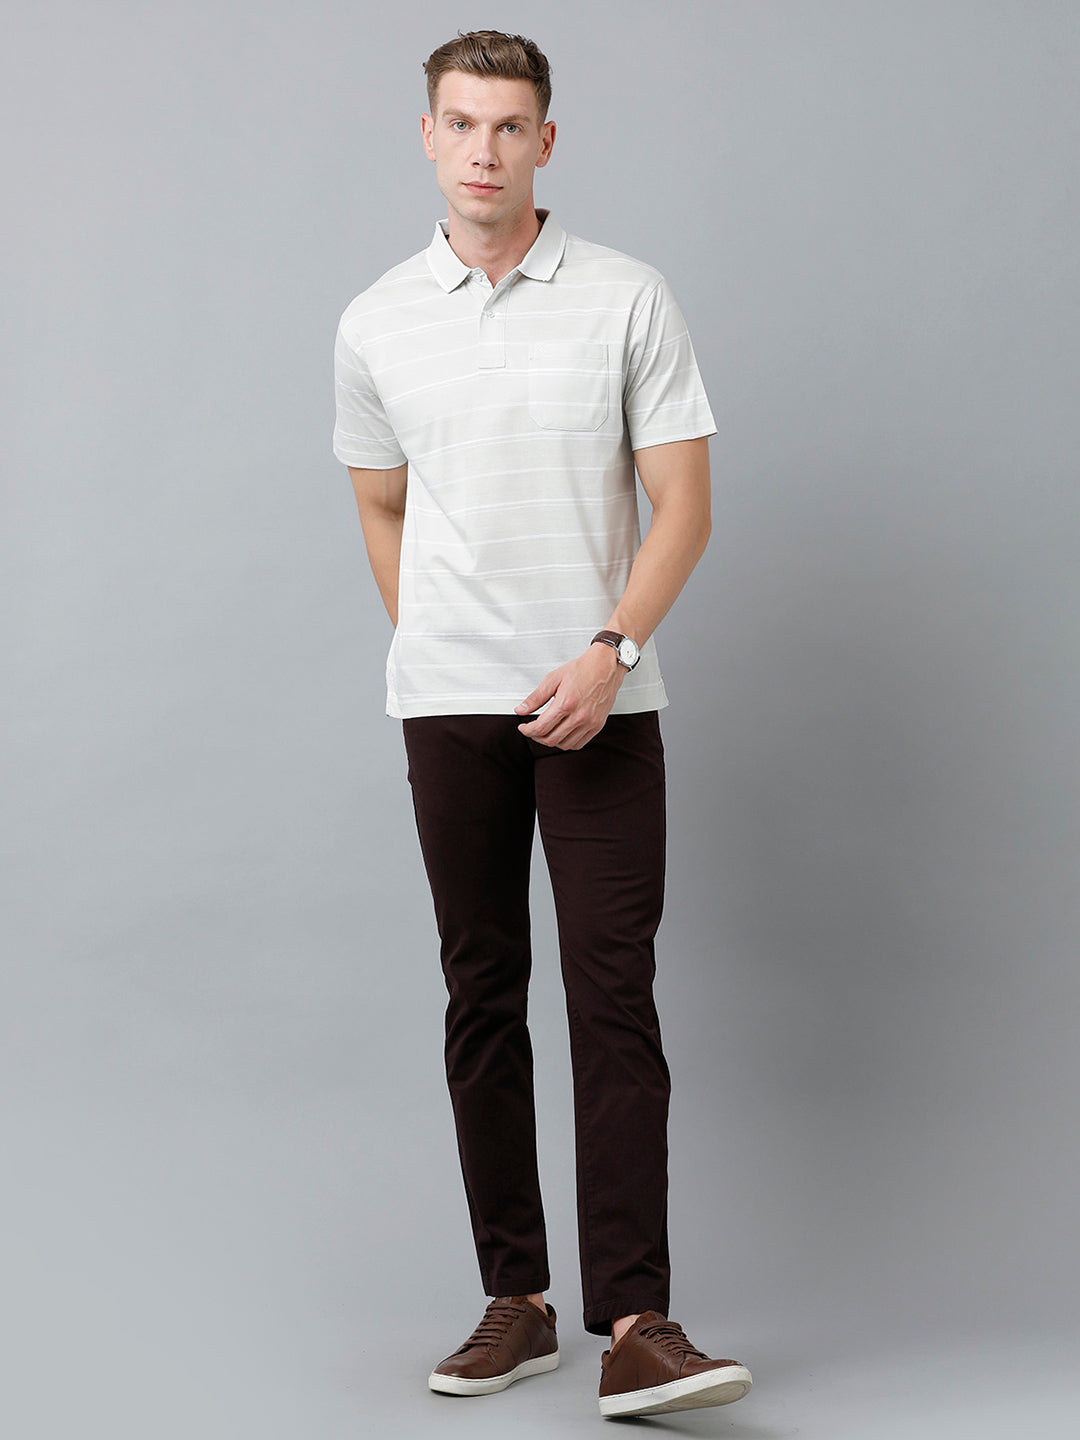 Classic Polo Men's Cotton Half Sleeve Striped Authentic Fit Polo Neck Light Grey Color T-Shirt | Ap - 88 A